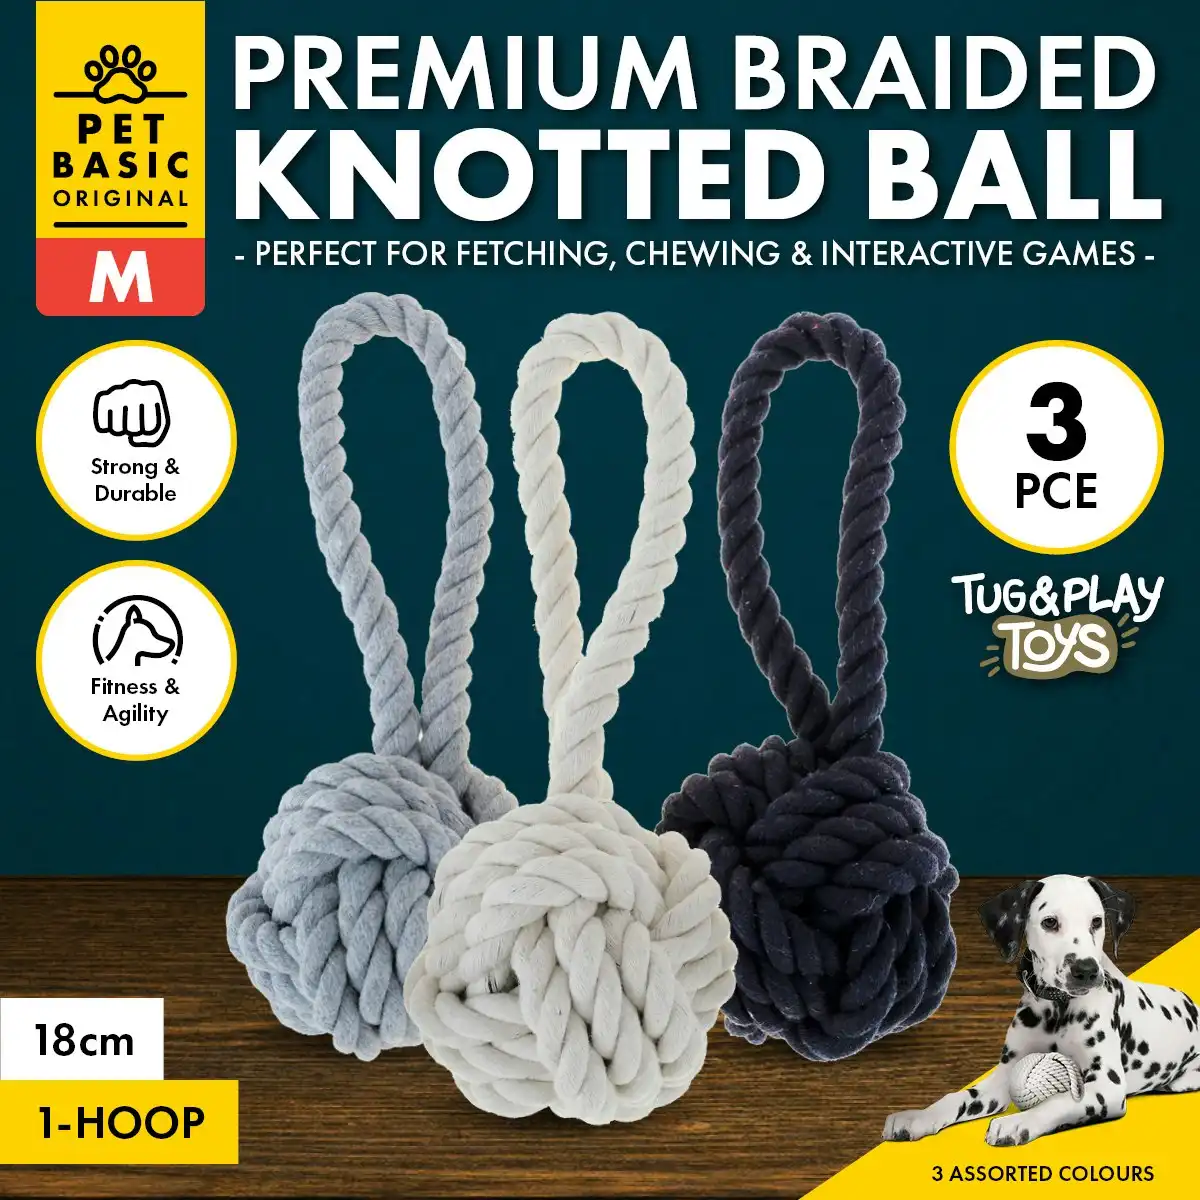 Pet Basic 3PCE Premium Braided Rope Knotted Ball Medium Natural Fibres 18cm